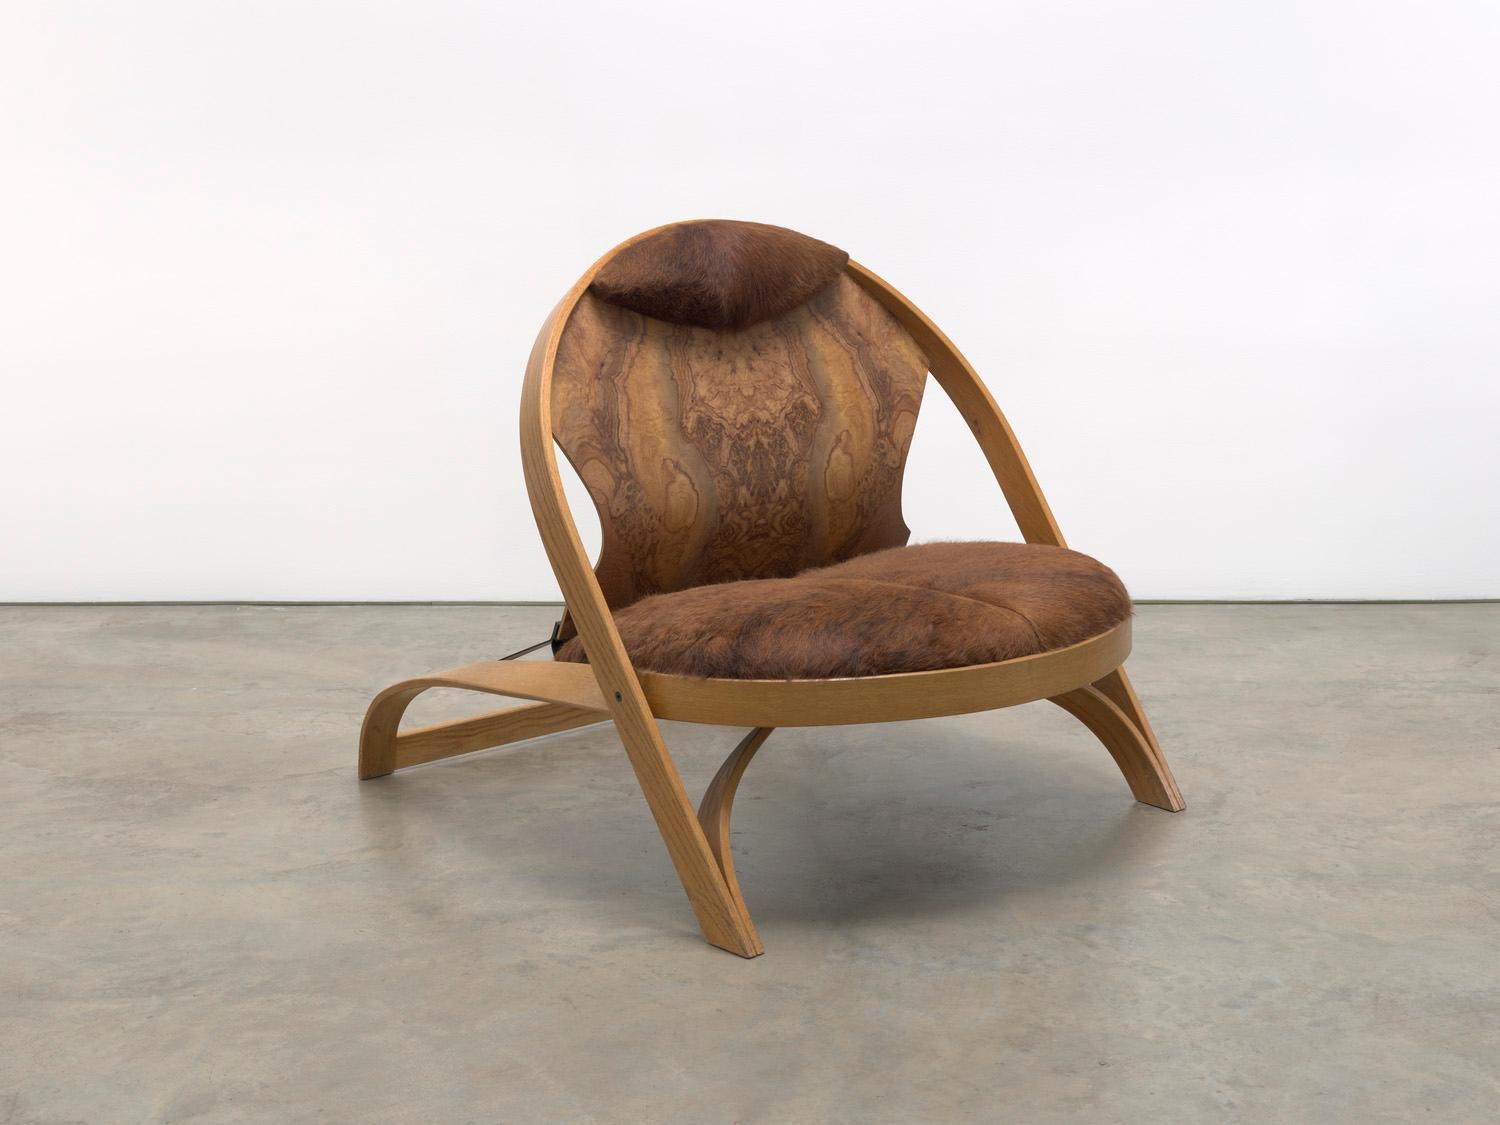 Chair/Chair - Art by Richard Artschwager